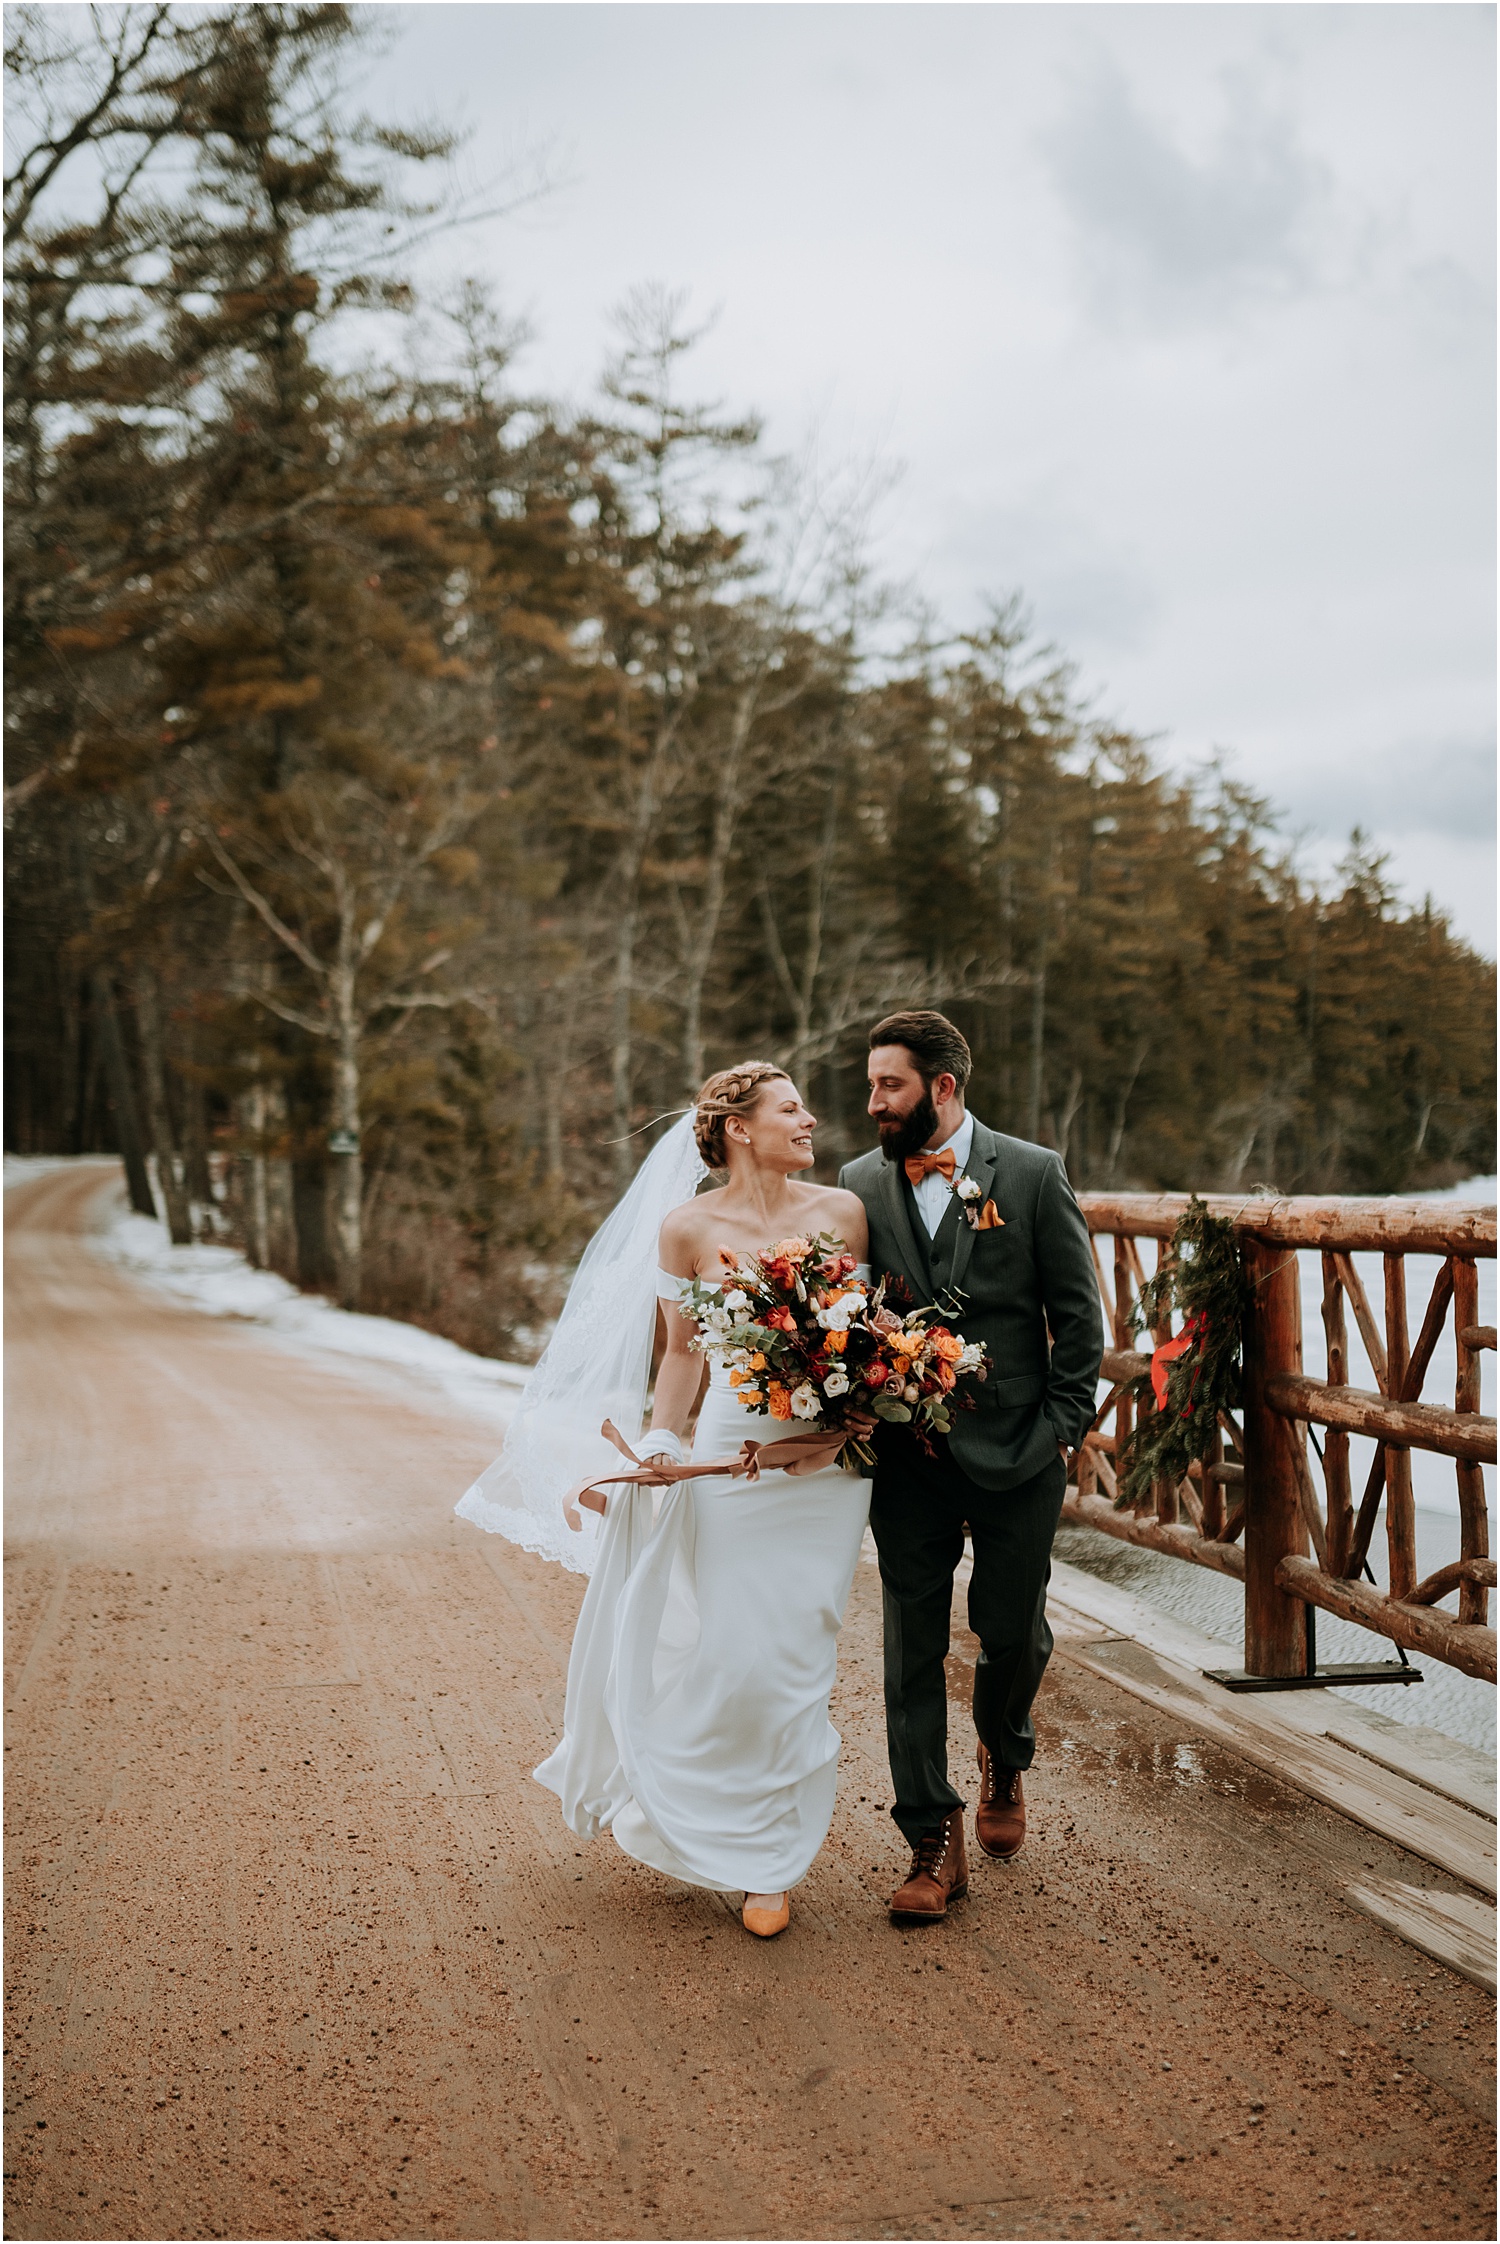 The Preserve at Chocorua, New Hampshire Wedding